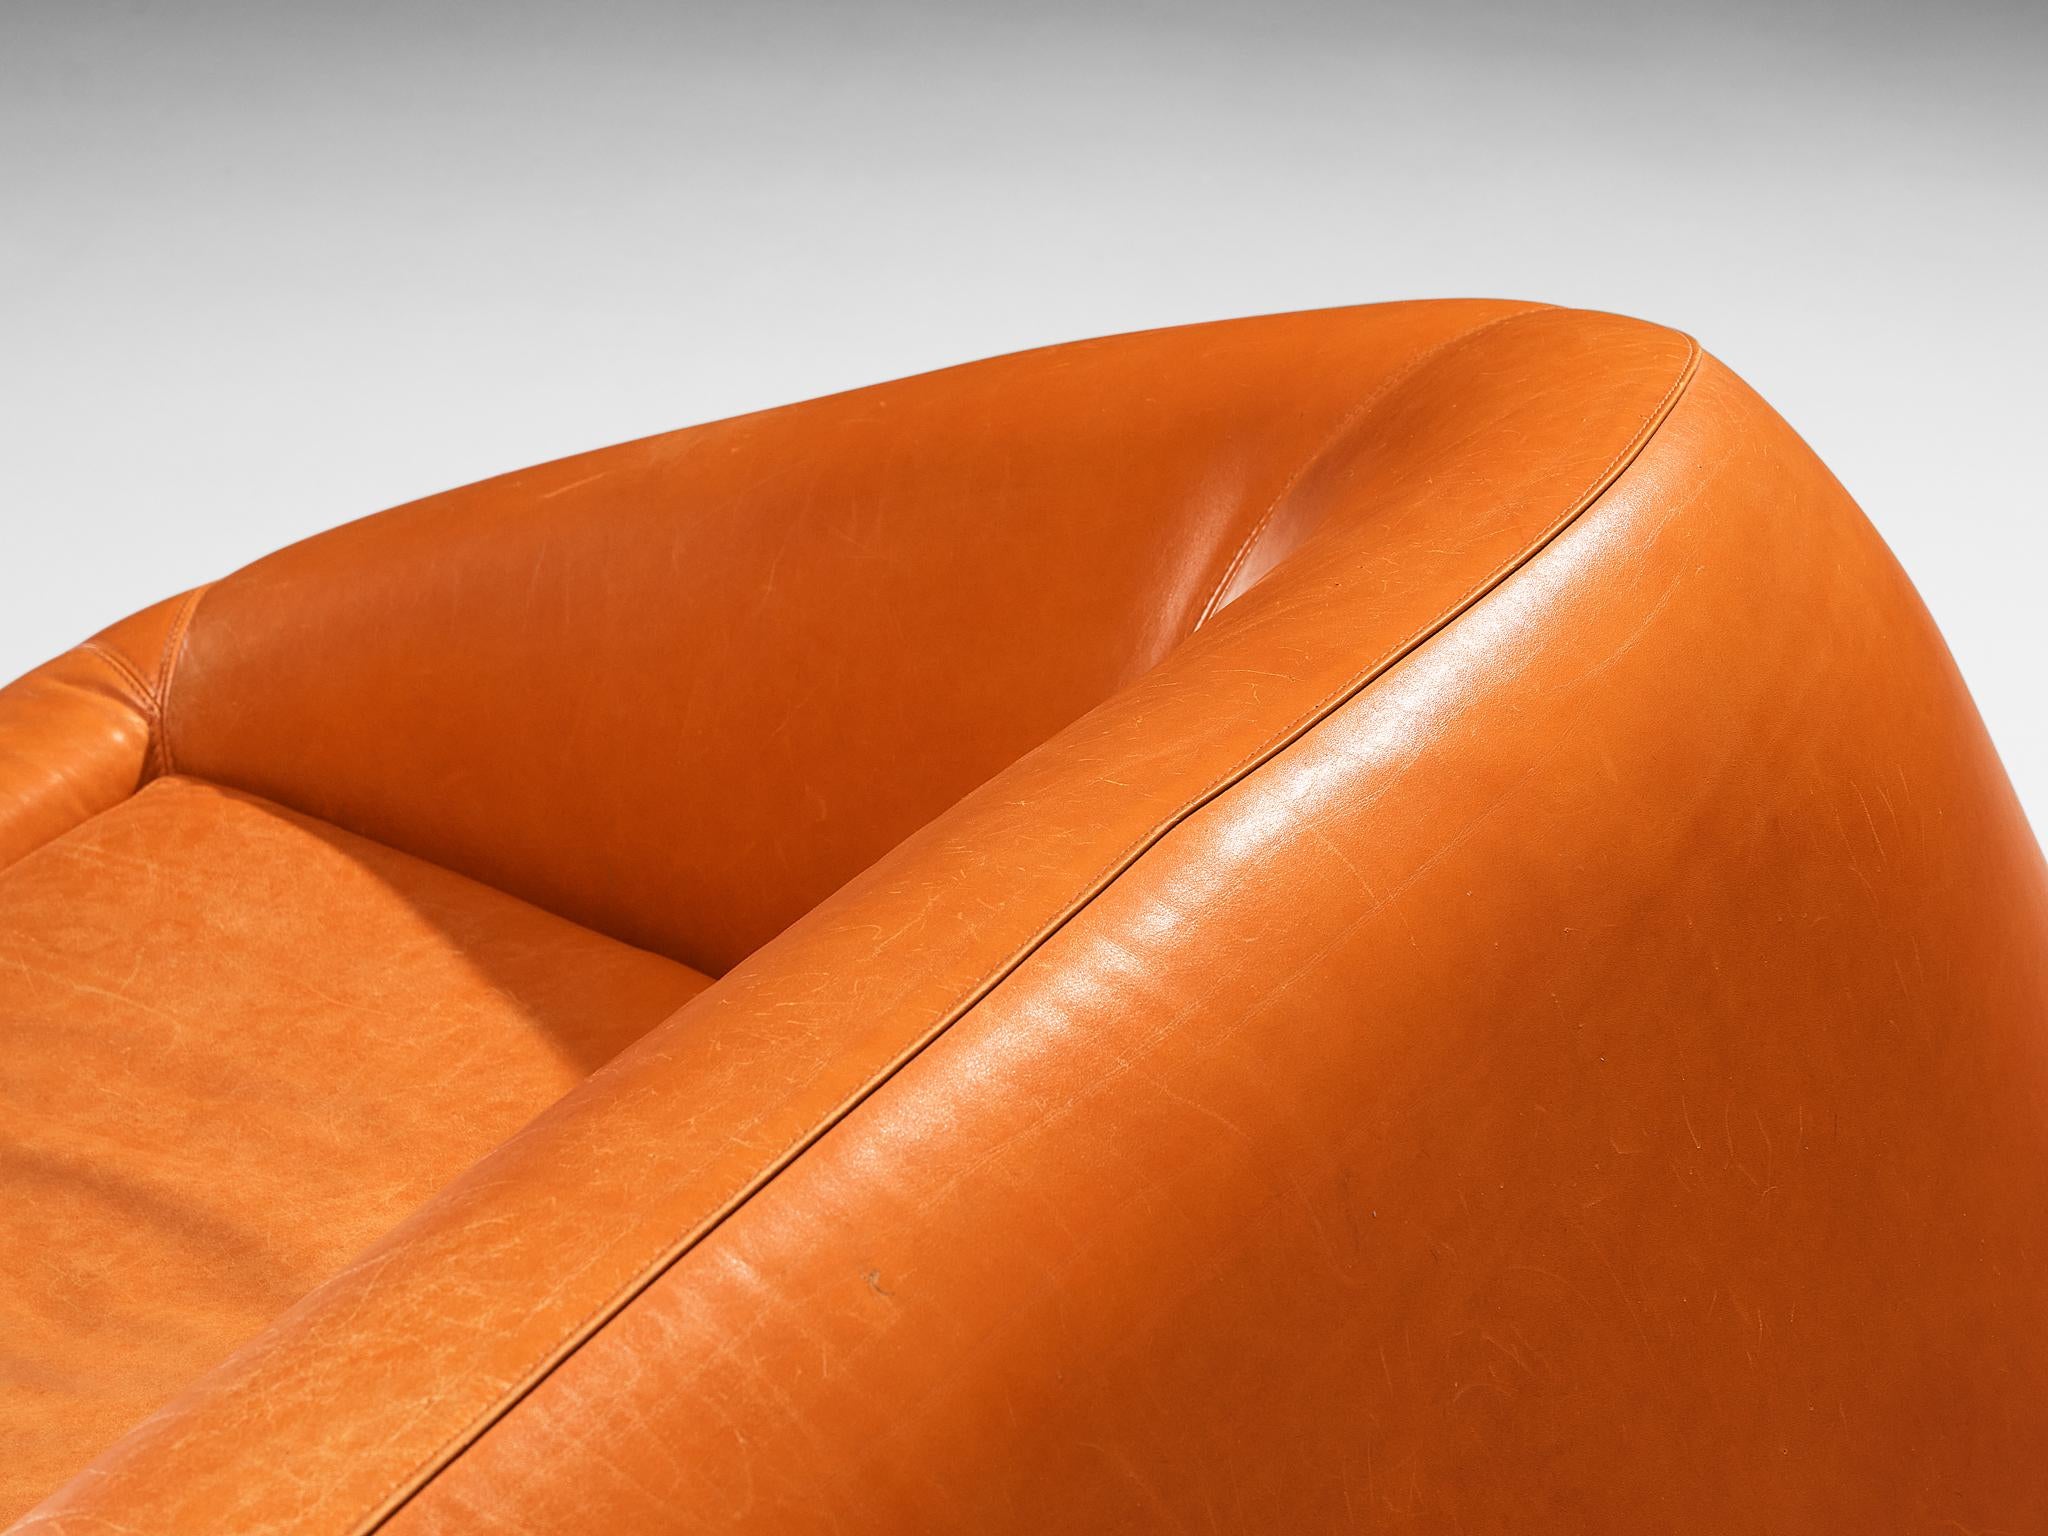 European Futuristic Three-Seat Sofa in Leather